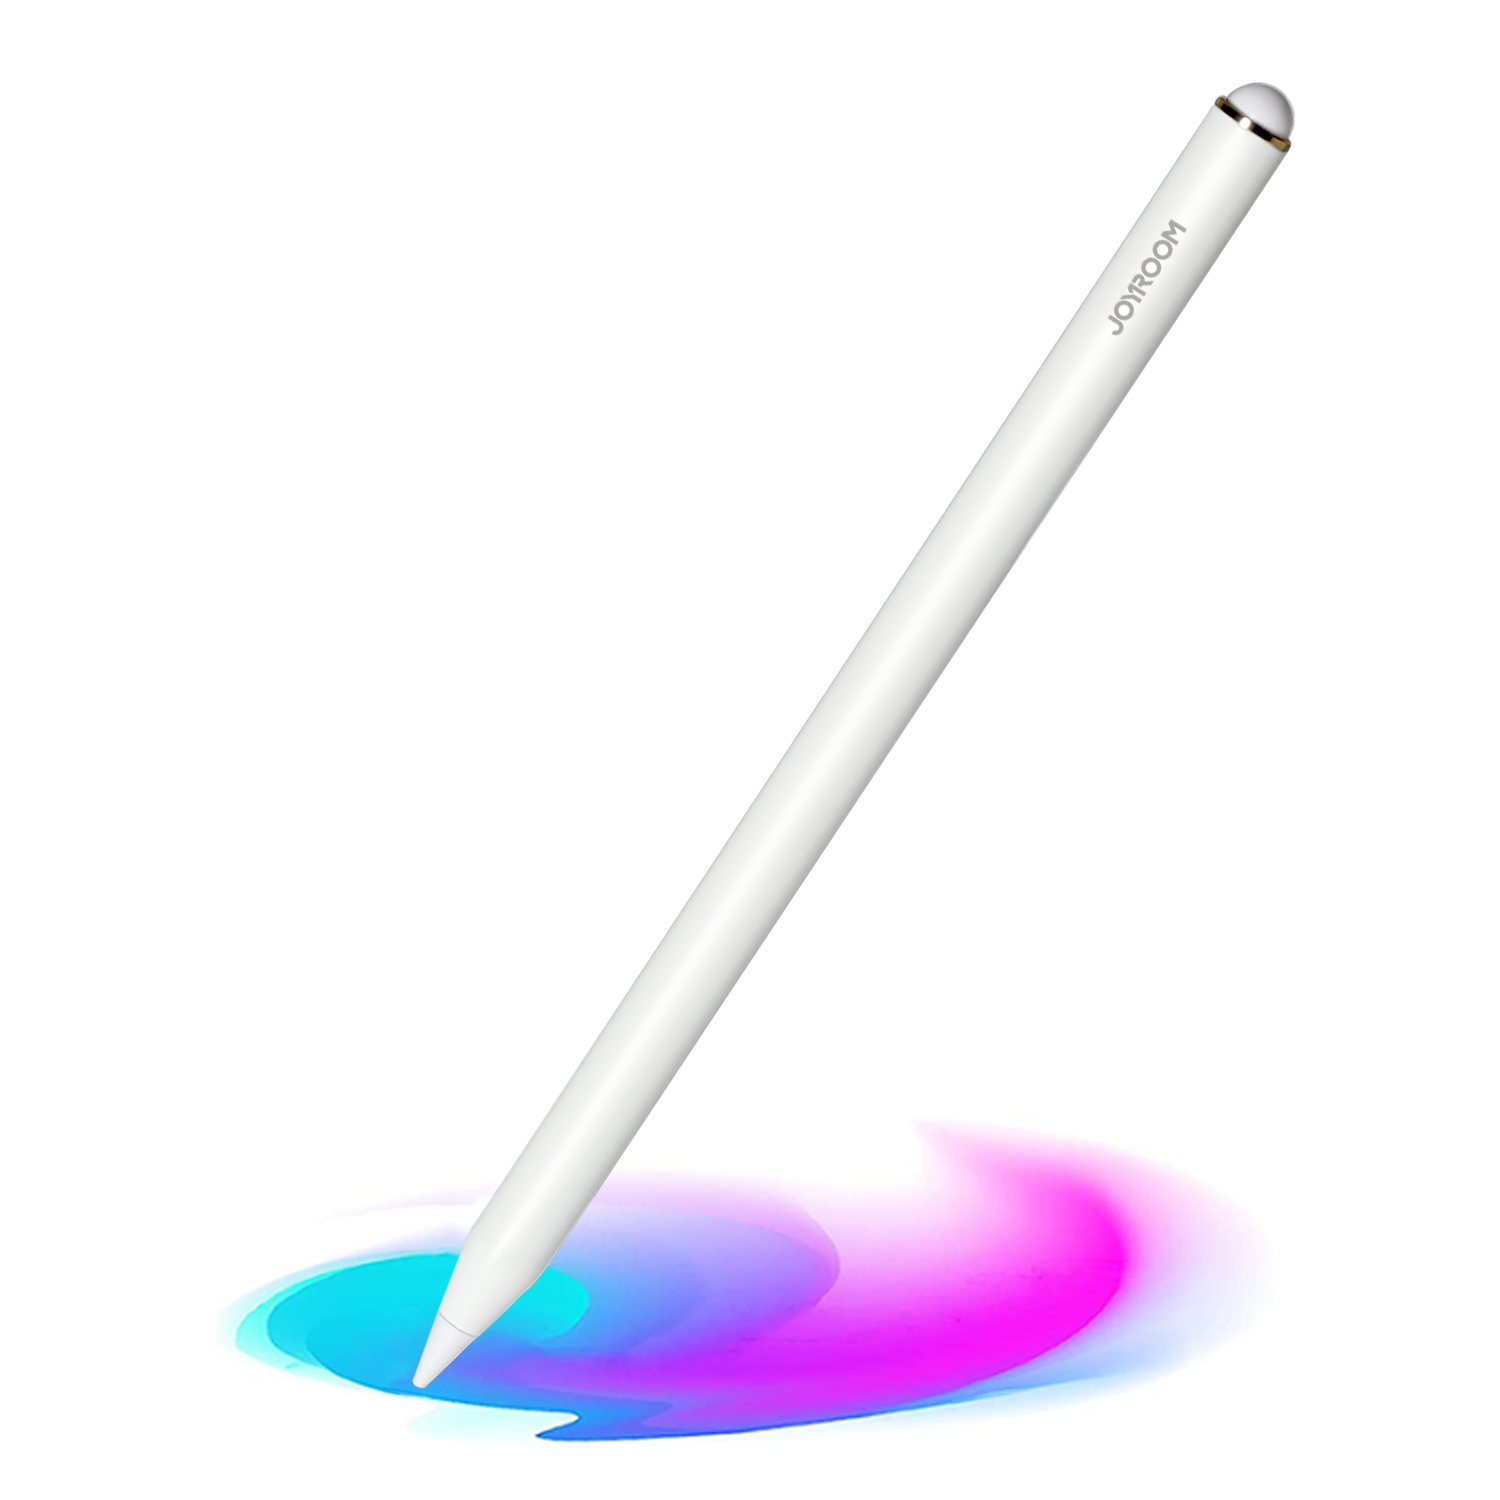 Joyroom X9 Active Stylus Touch Digital Pen, White - JR-X9